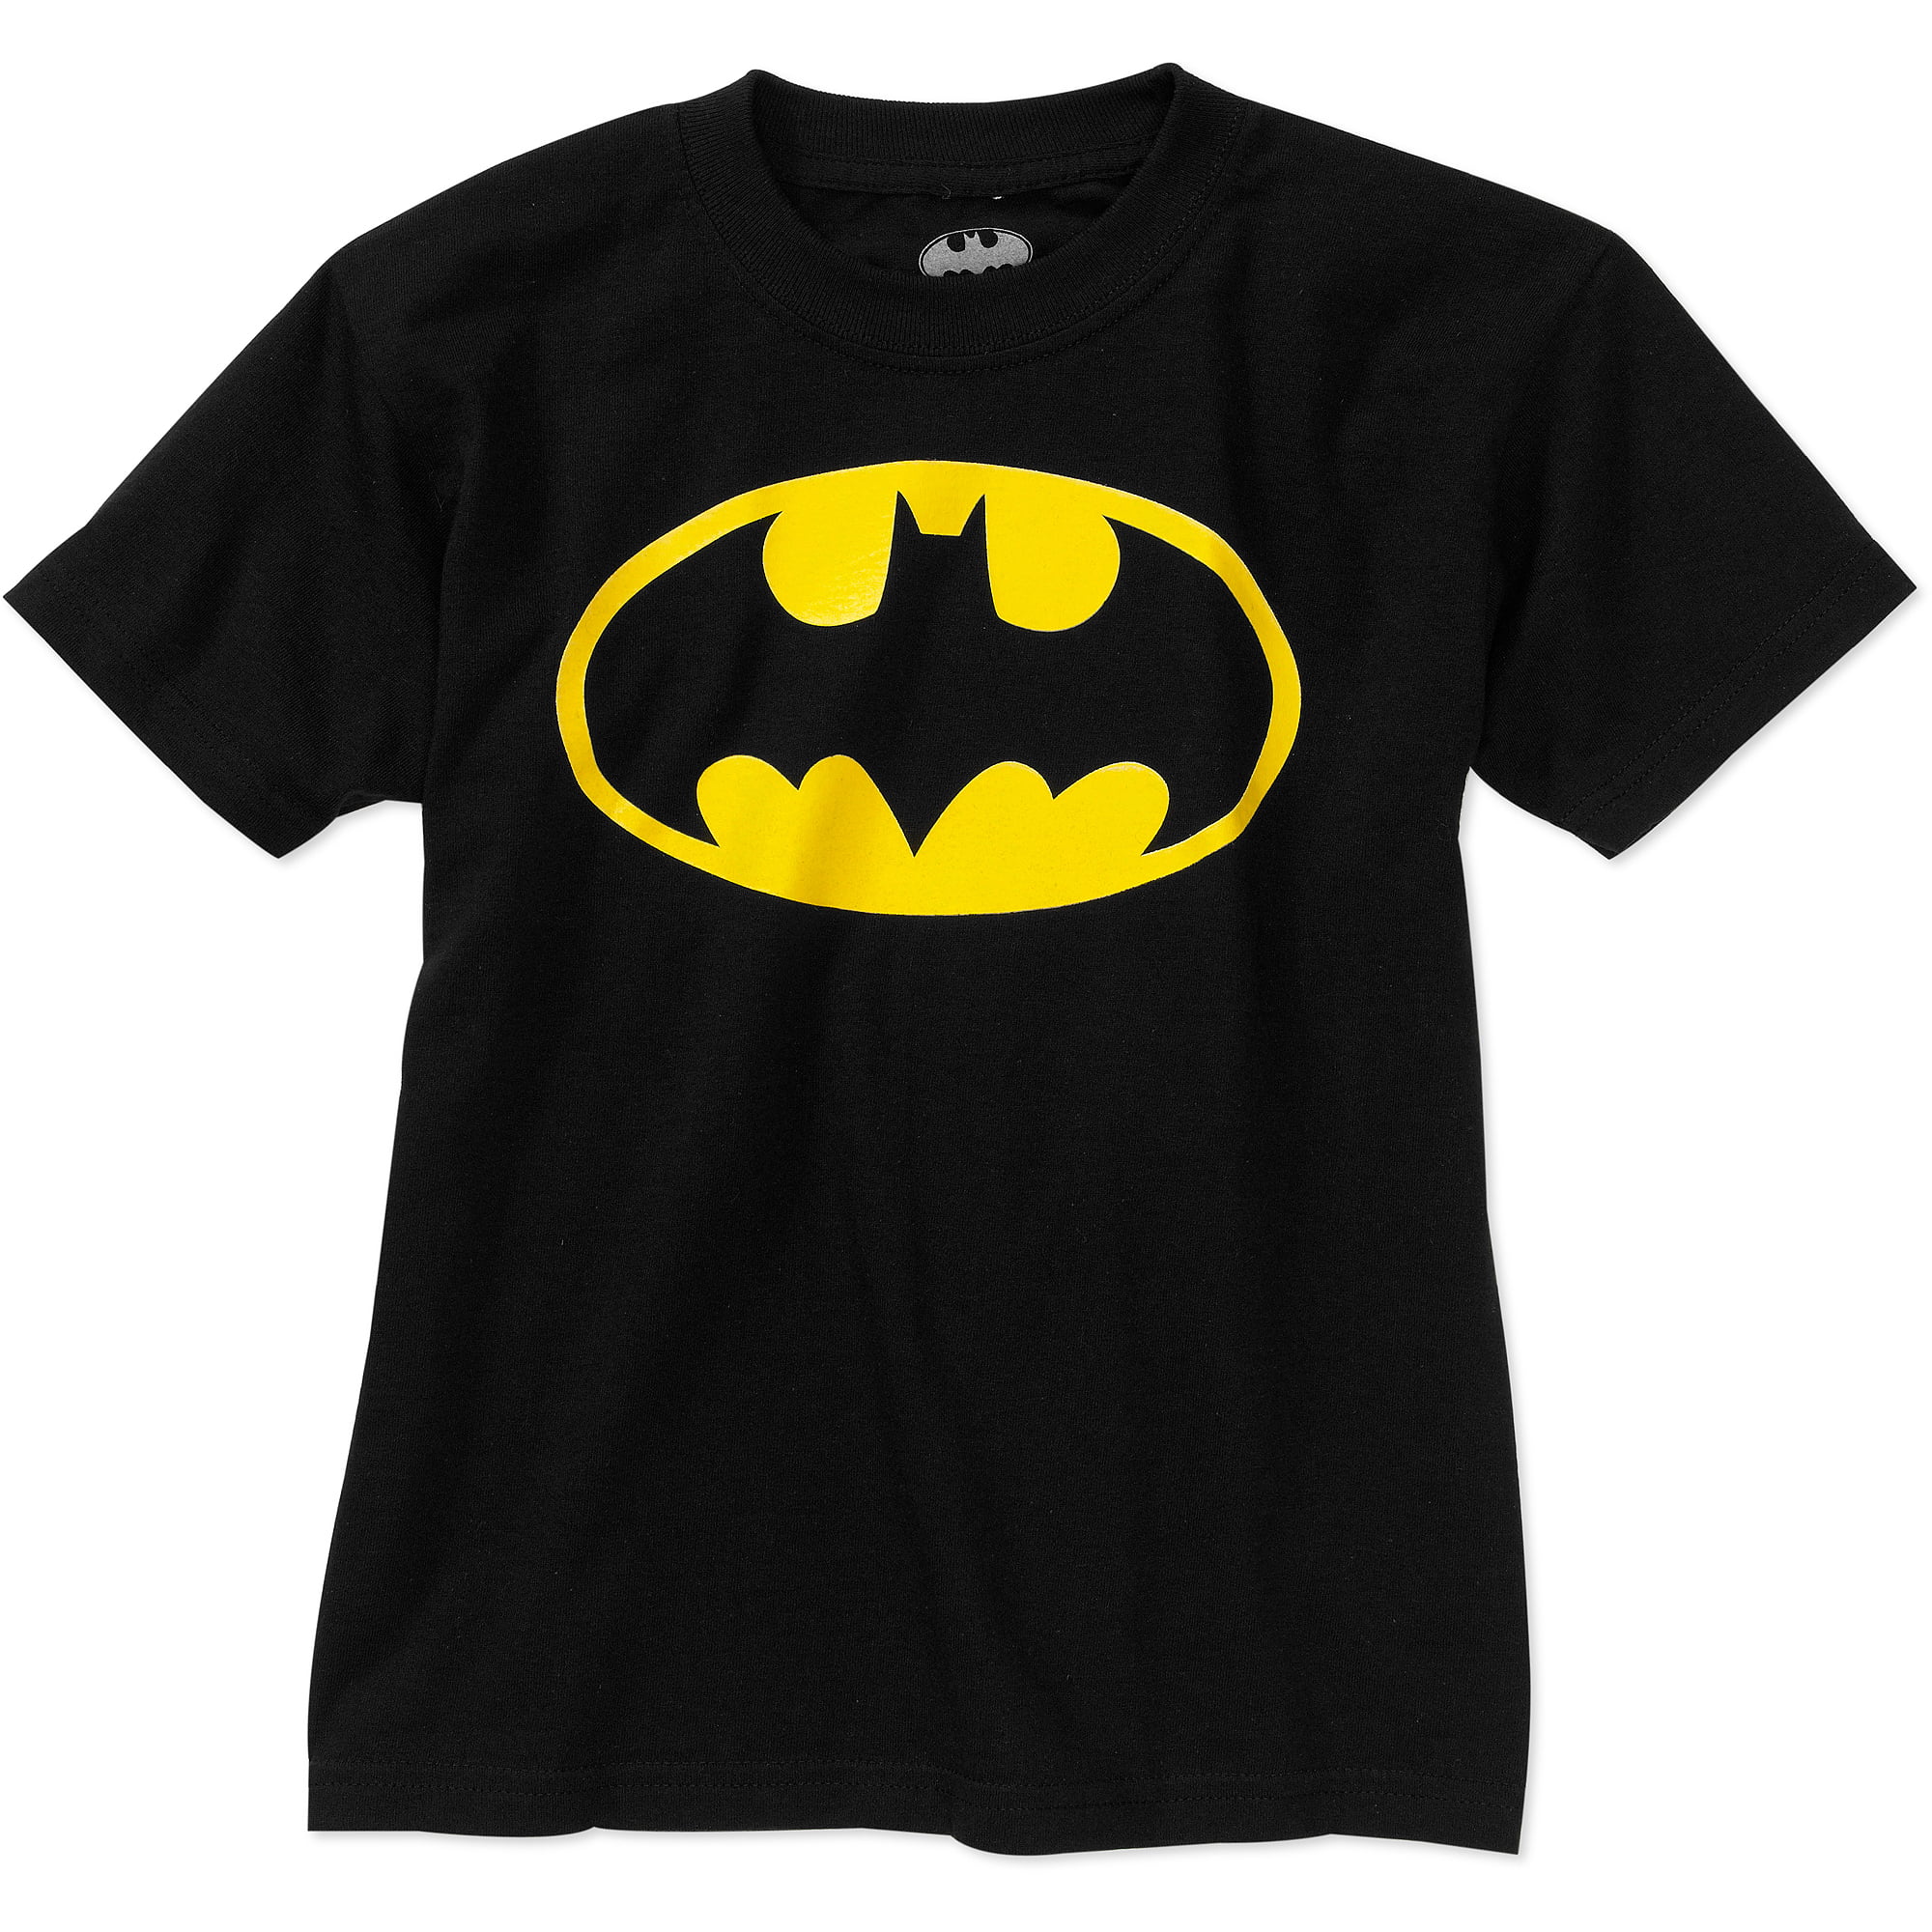 batman graphic t shirt